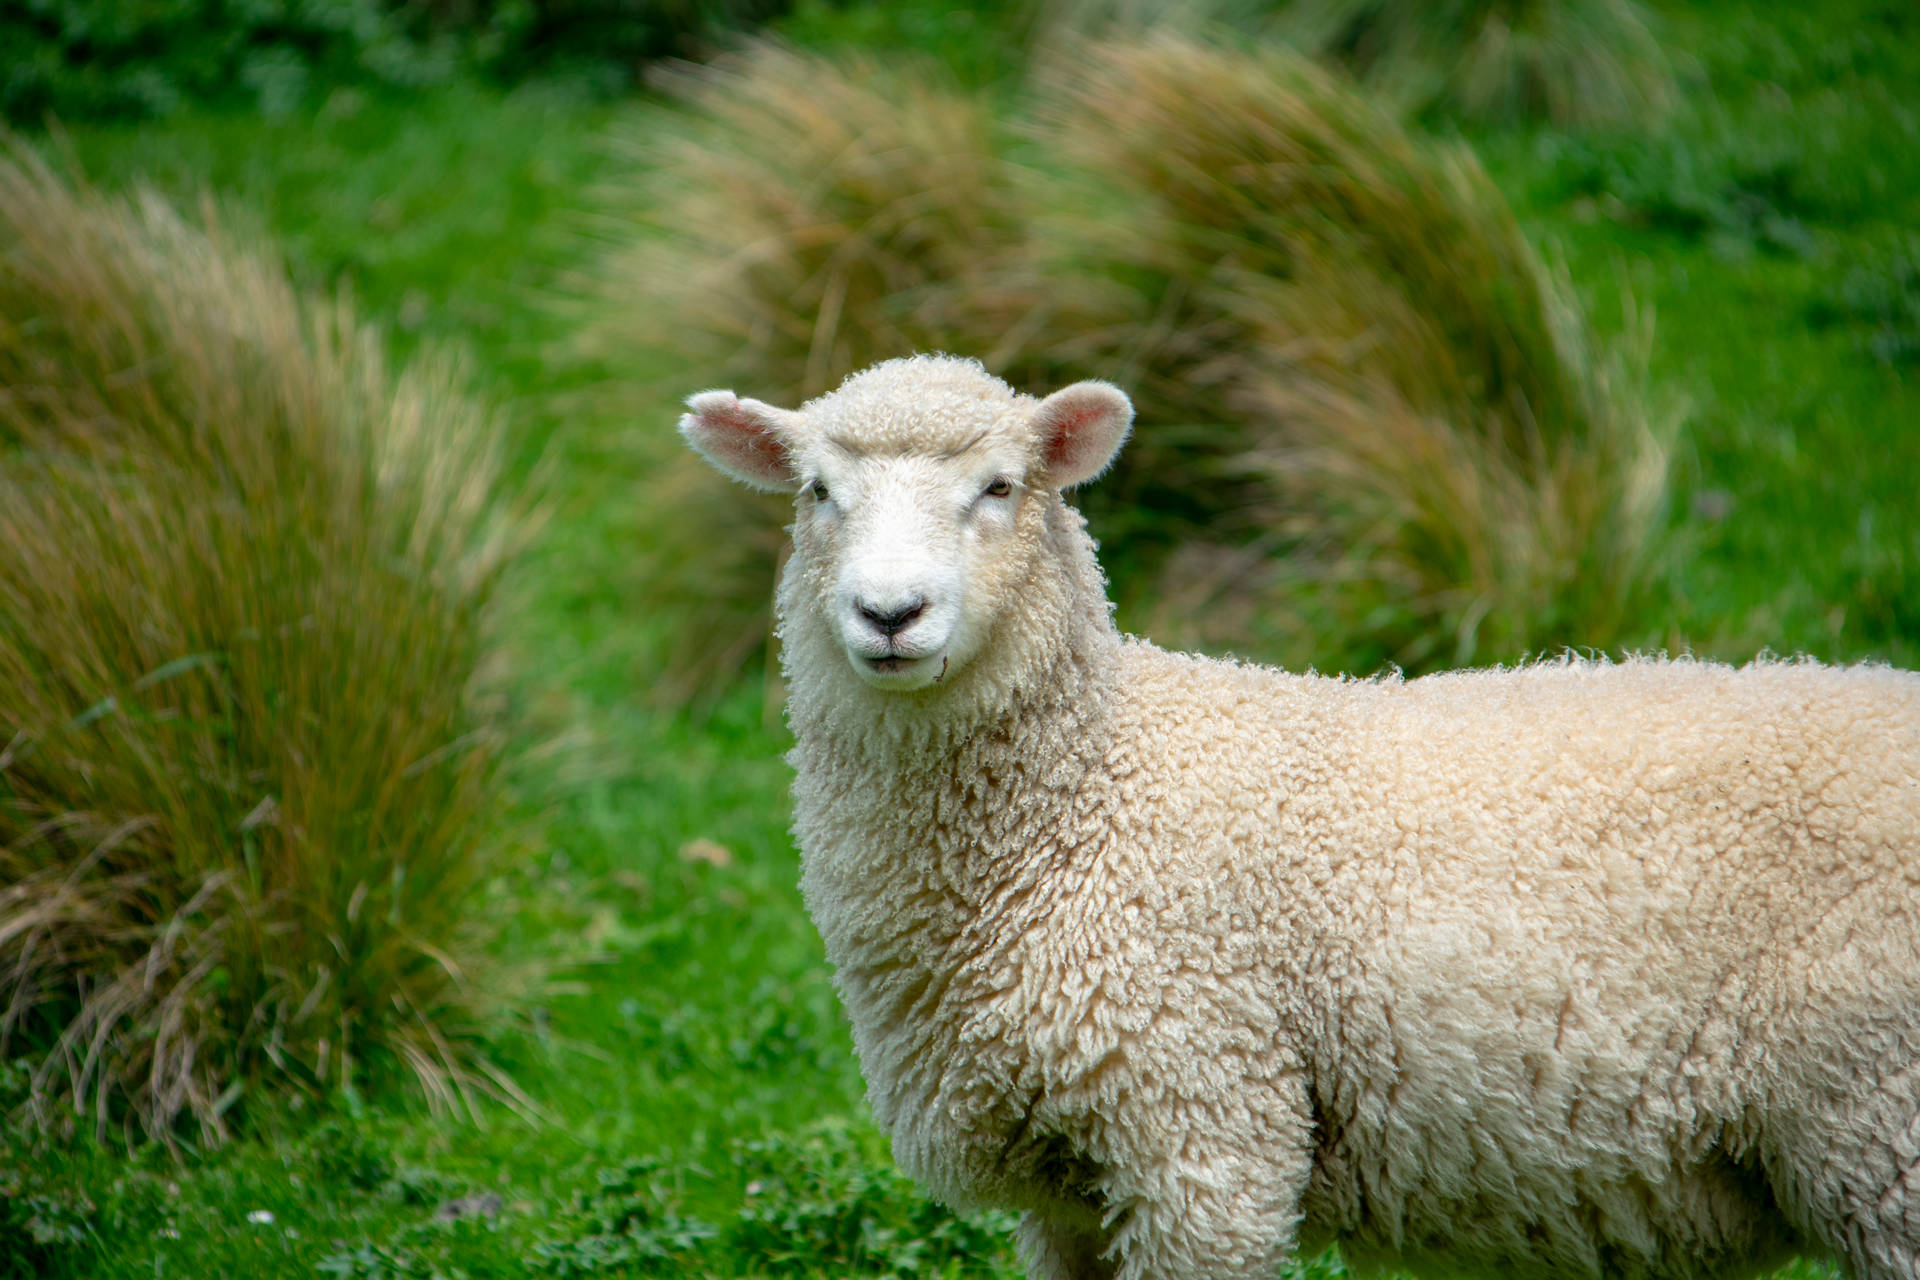 Sheep In Grassy Soil Background